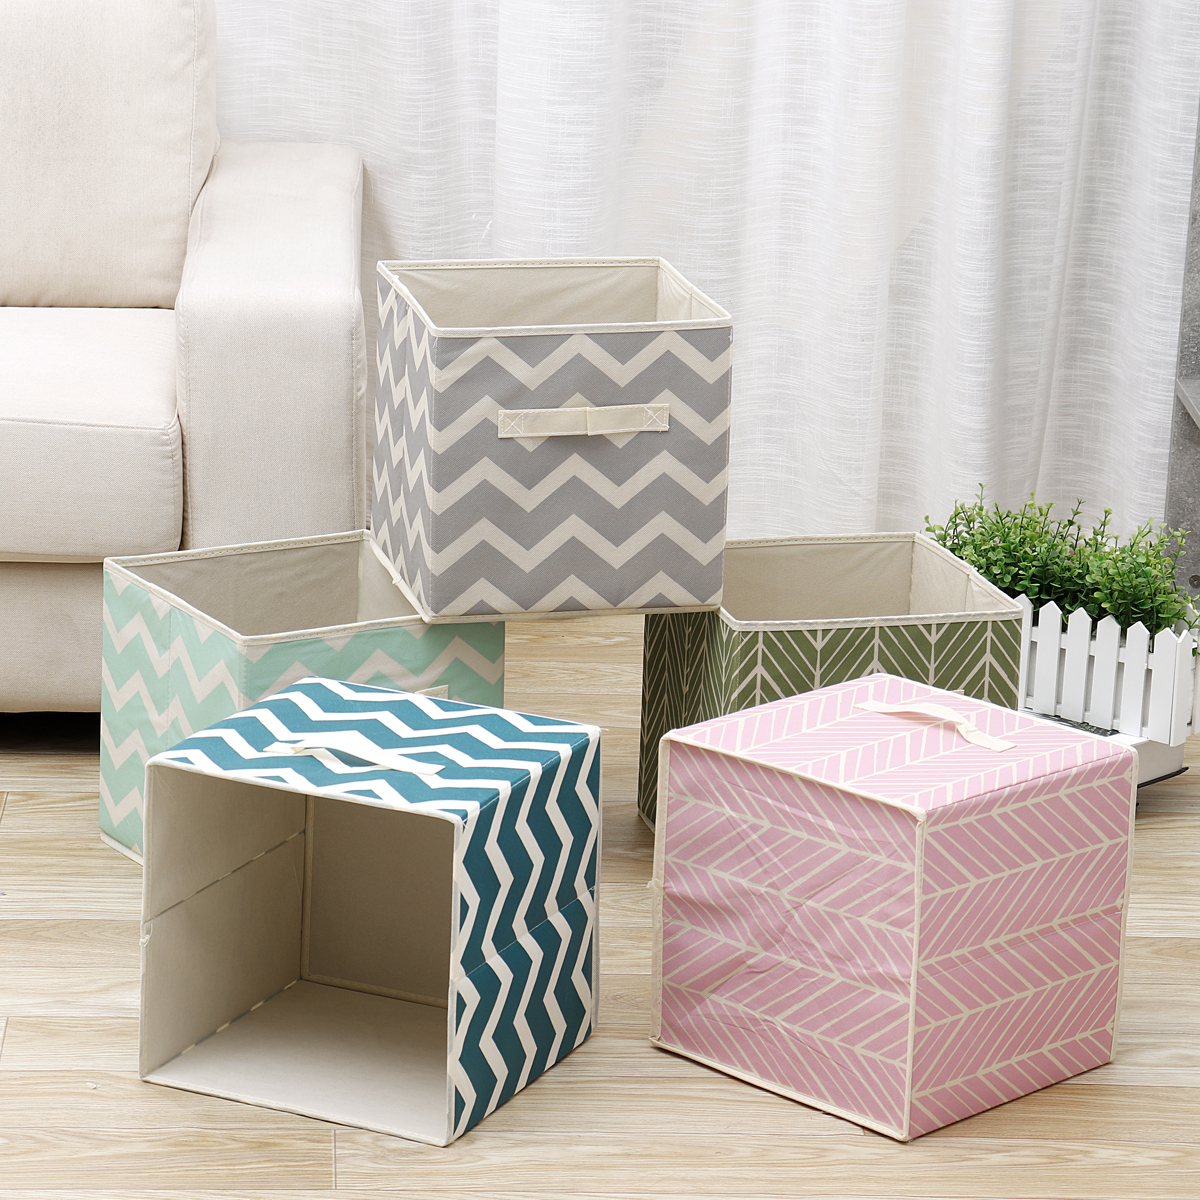 Foldable-Canvas-Storage-Box-Fabric-Cube-Cloth-Basket-Bag-Home-Cosmetic-Case-Basket-Desk-Organizer-Bi-1746401-21